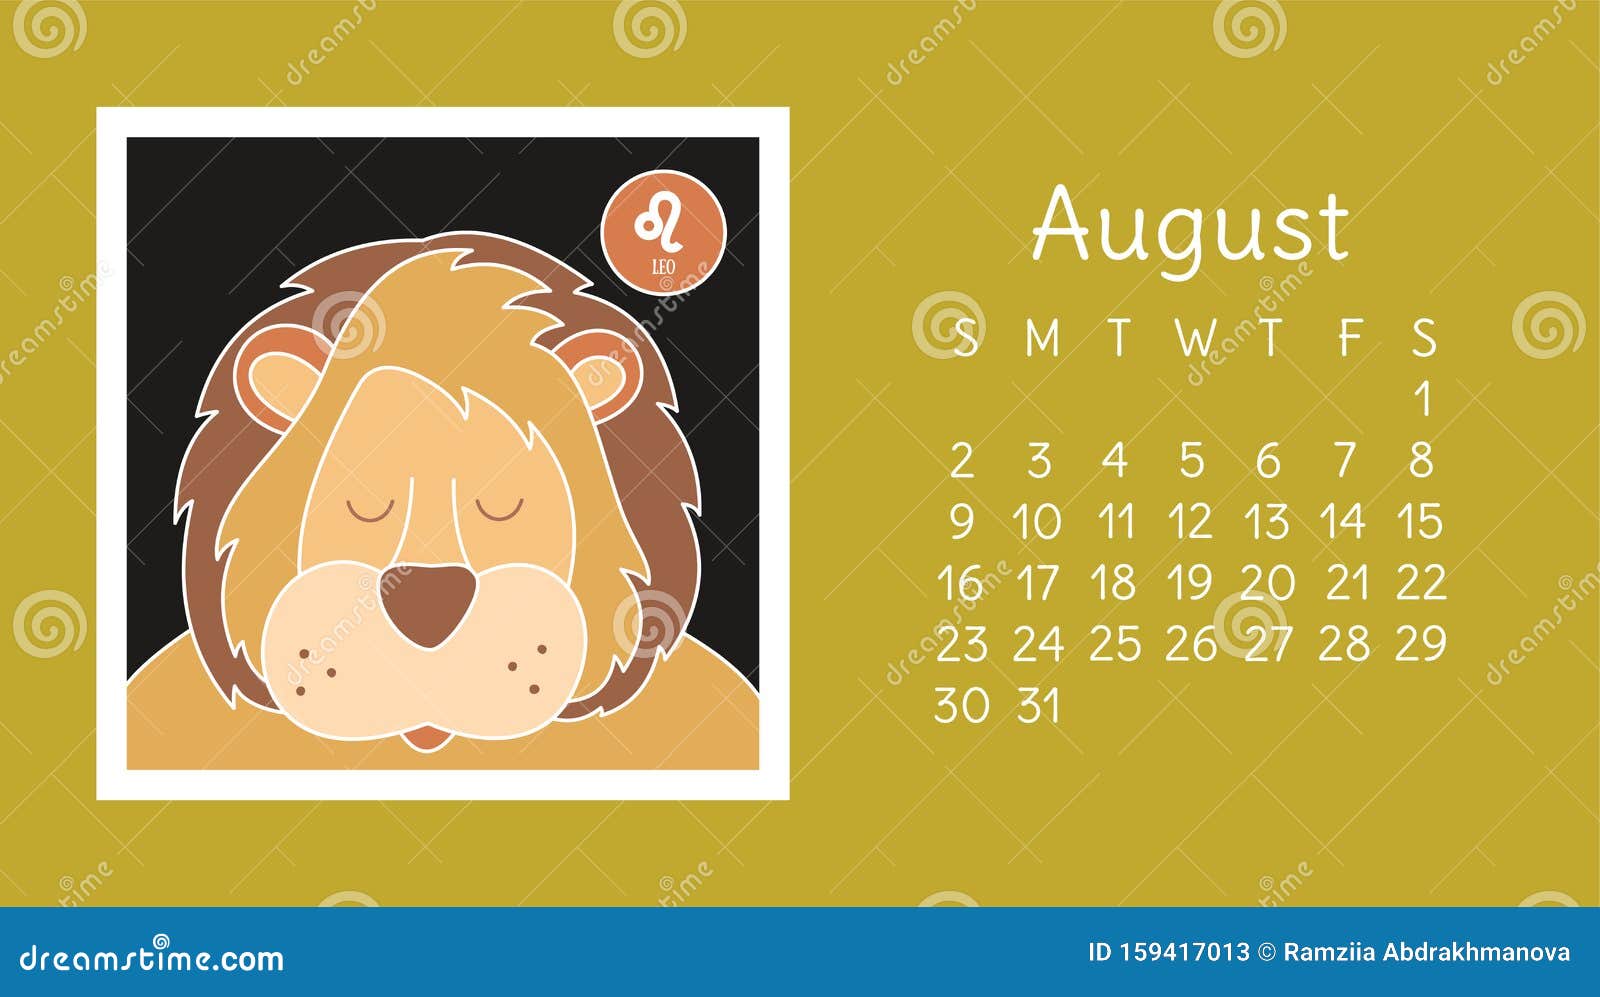 August 2020 Calendar Zodiac Sign Leo Vector Horoscope Astrological Calender Color Design Stock Vector Illustration Of Year Creative 159417013